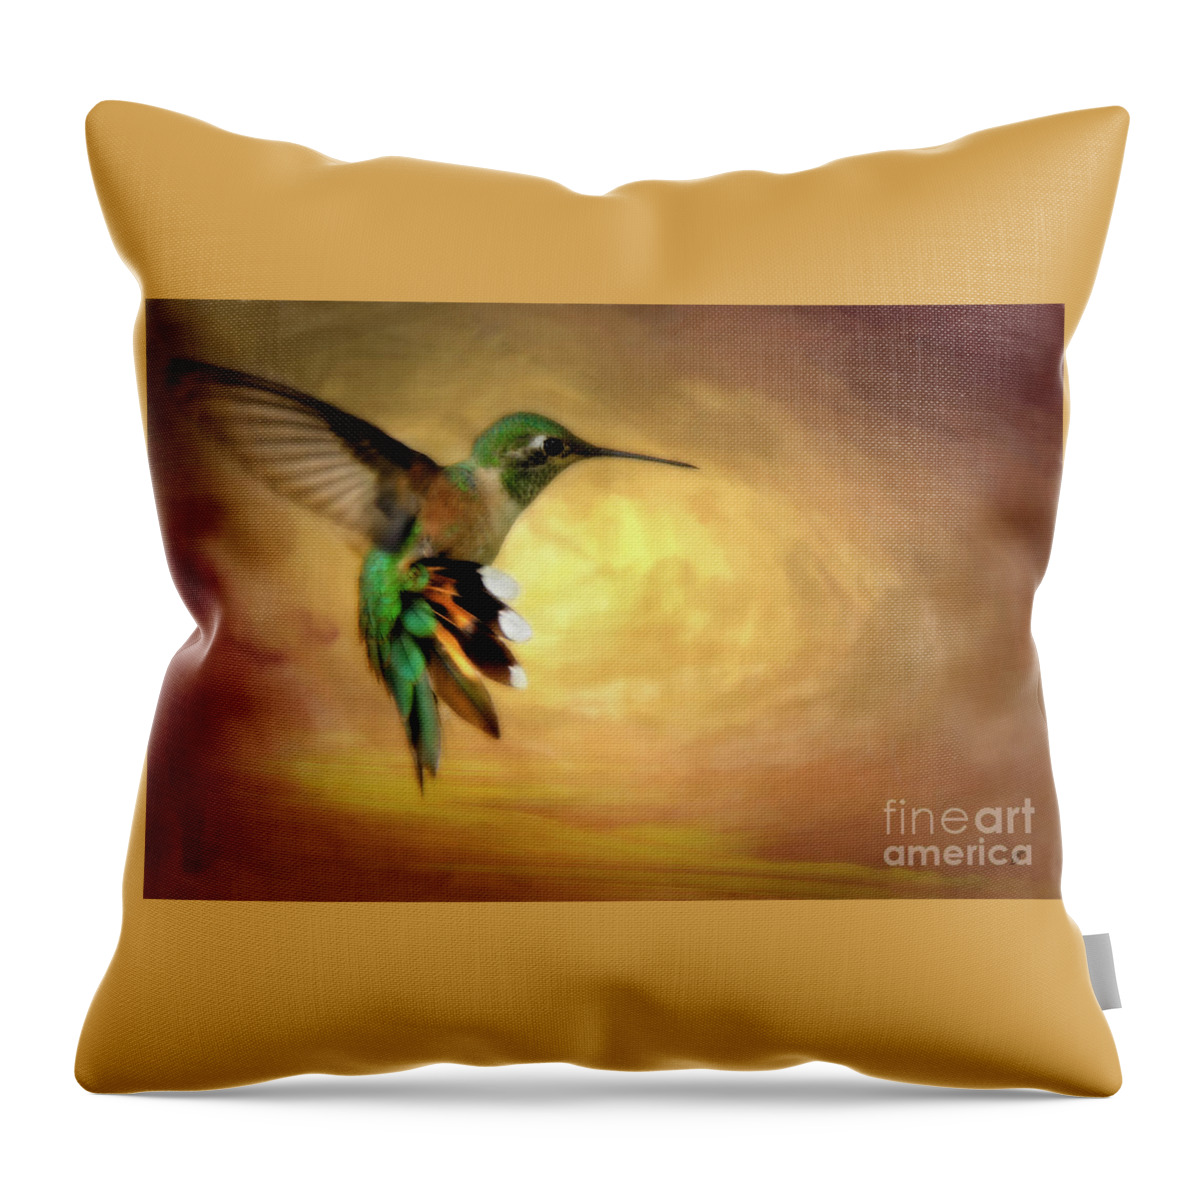 Fine Art Photography Throw Pillow featuring the photograph Hummingbird in Flight #2 by John Strong